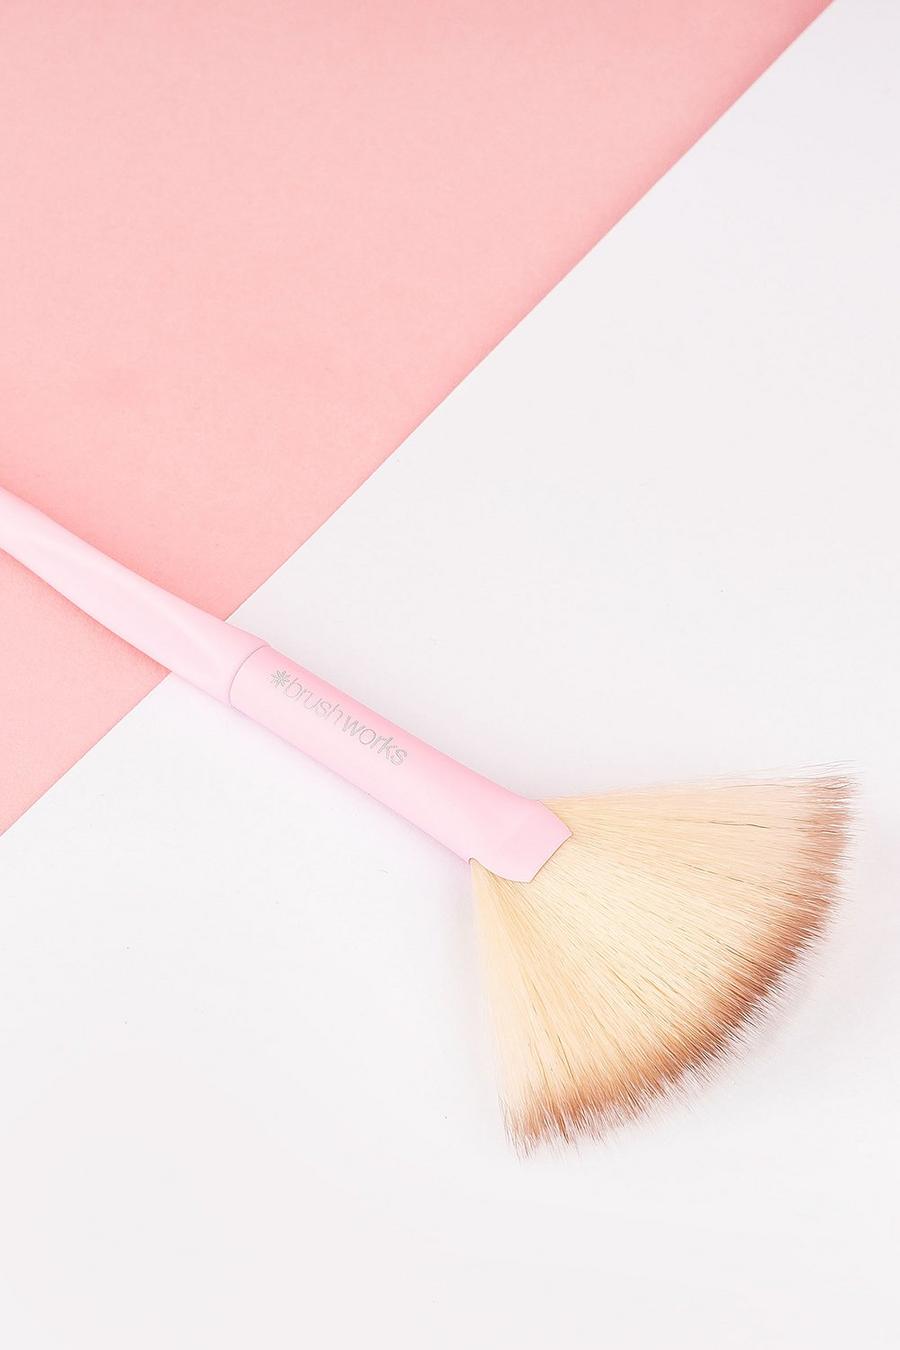 Baby pink rosa Brushworks Hd Fan Brush